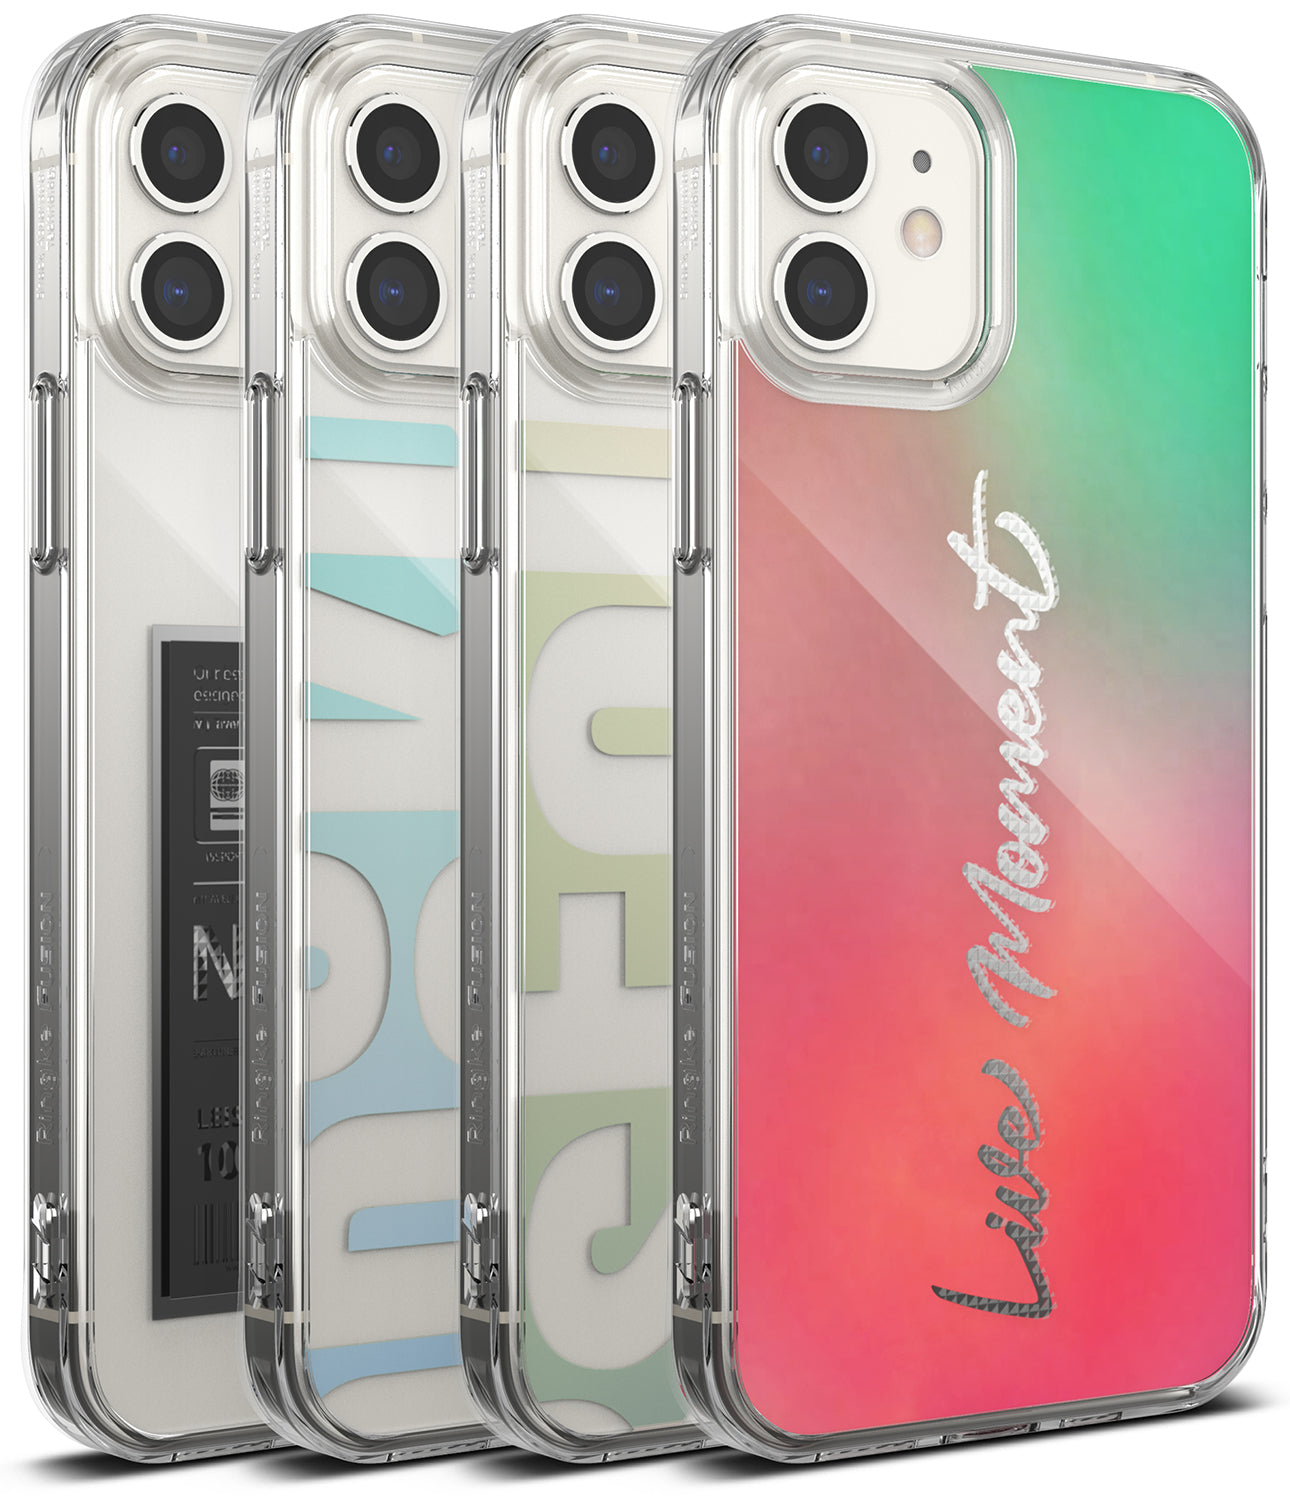 iphone 12 case, iphone 12 pro case - ringke fusion design